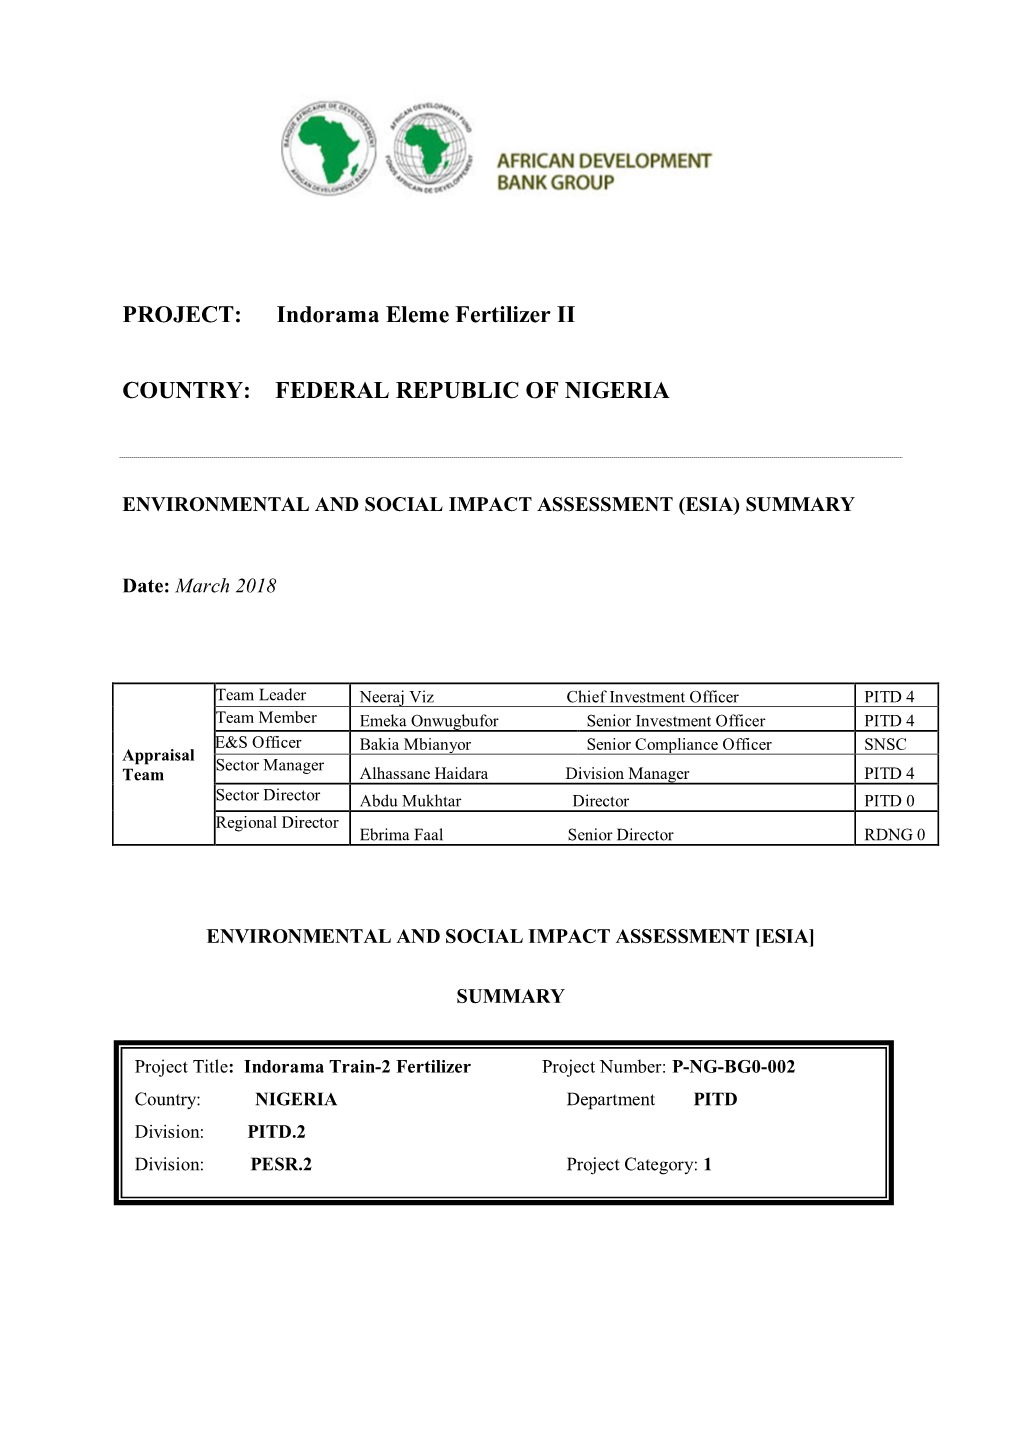 ESIA Summary-Indorama Eleme Fertilizer II-NIGERIA